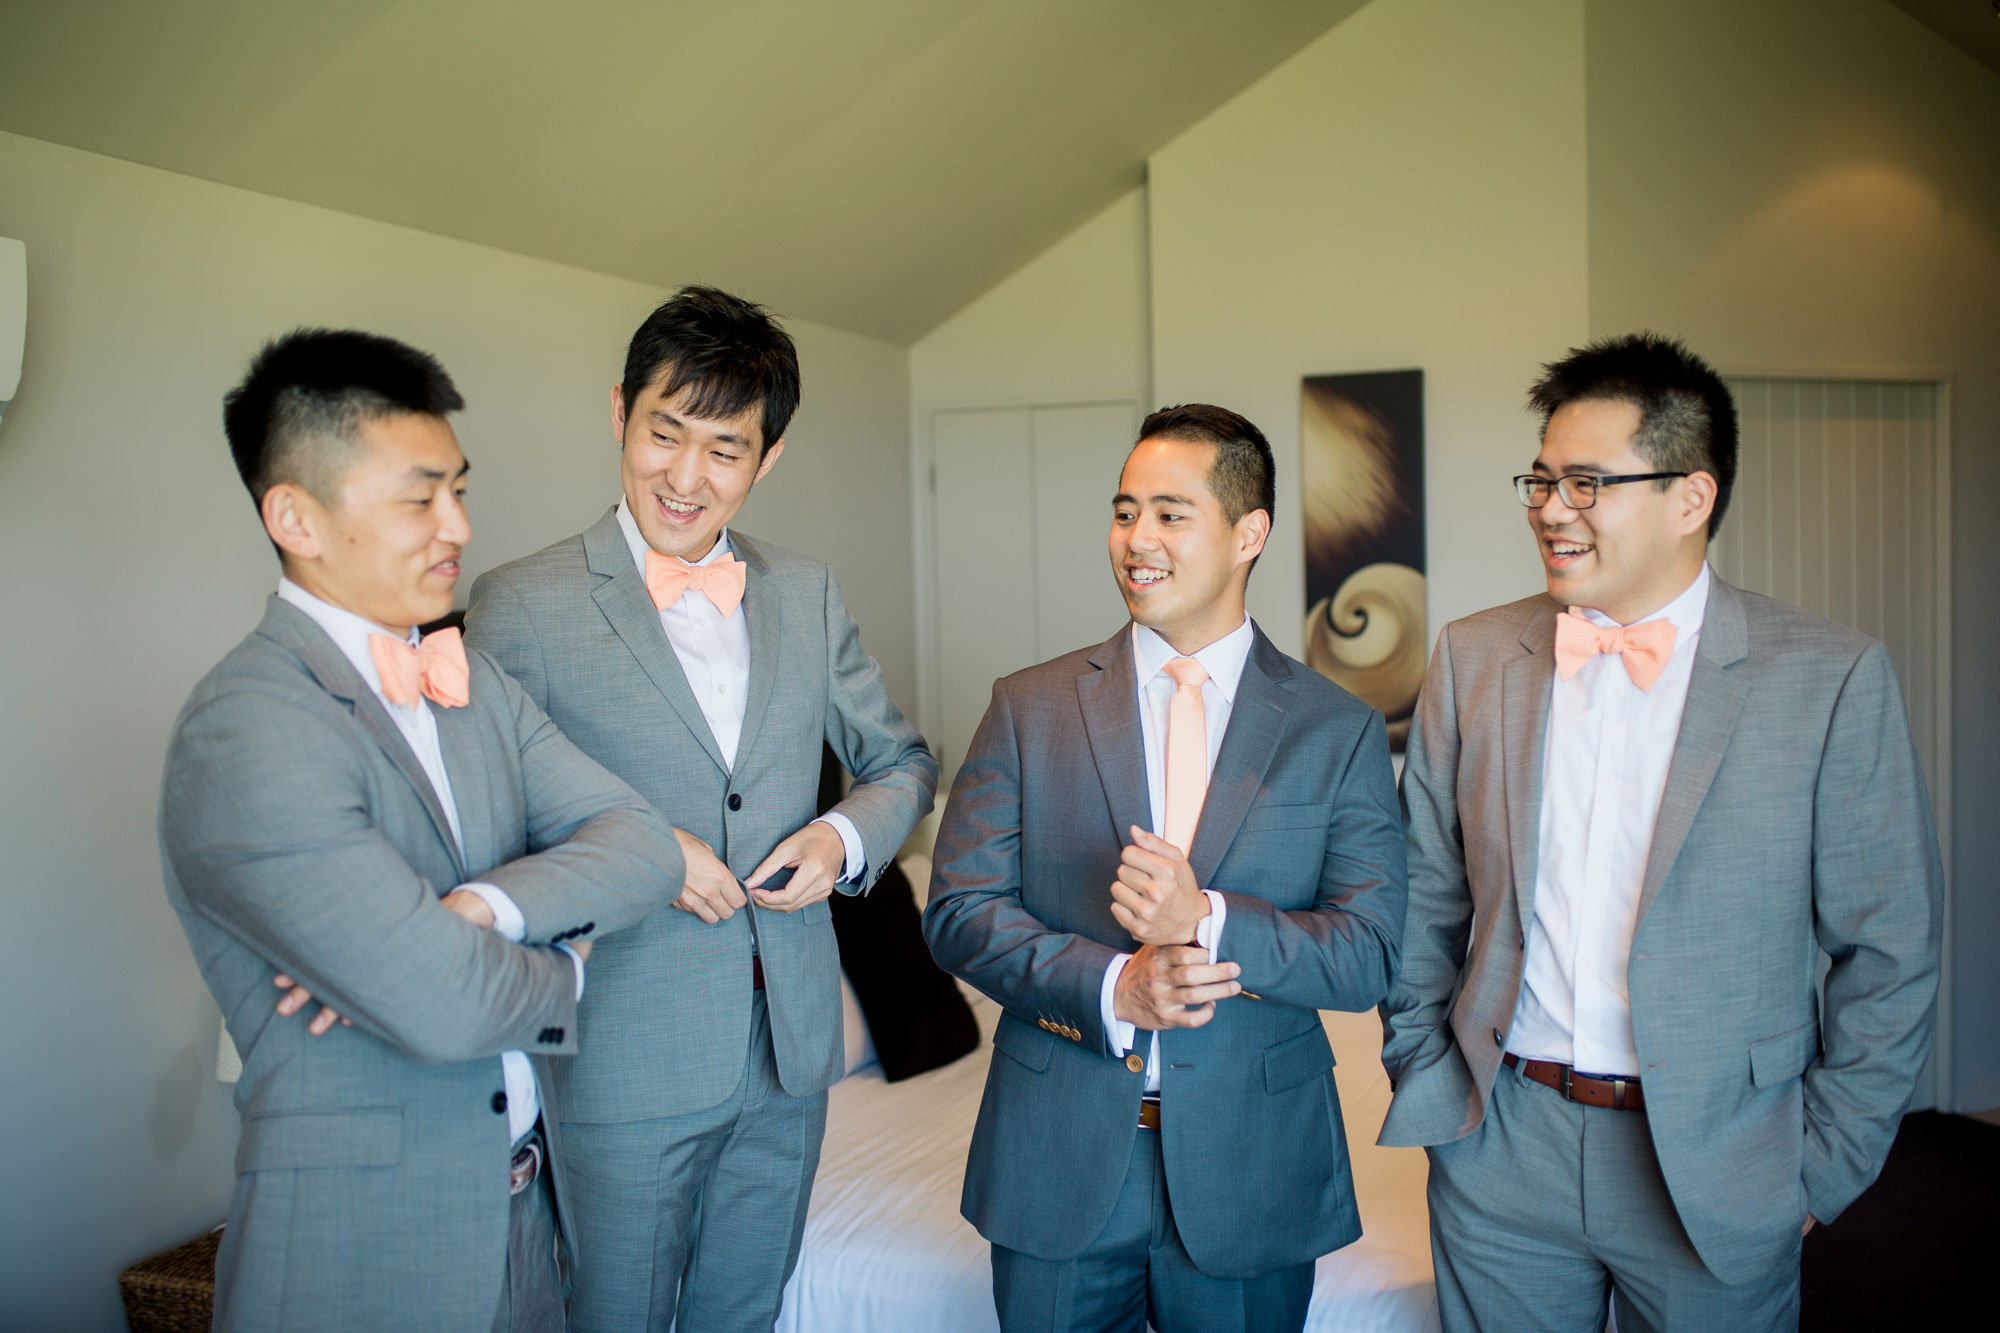 groom and the groomsmen